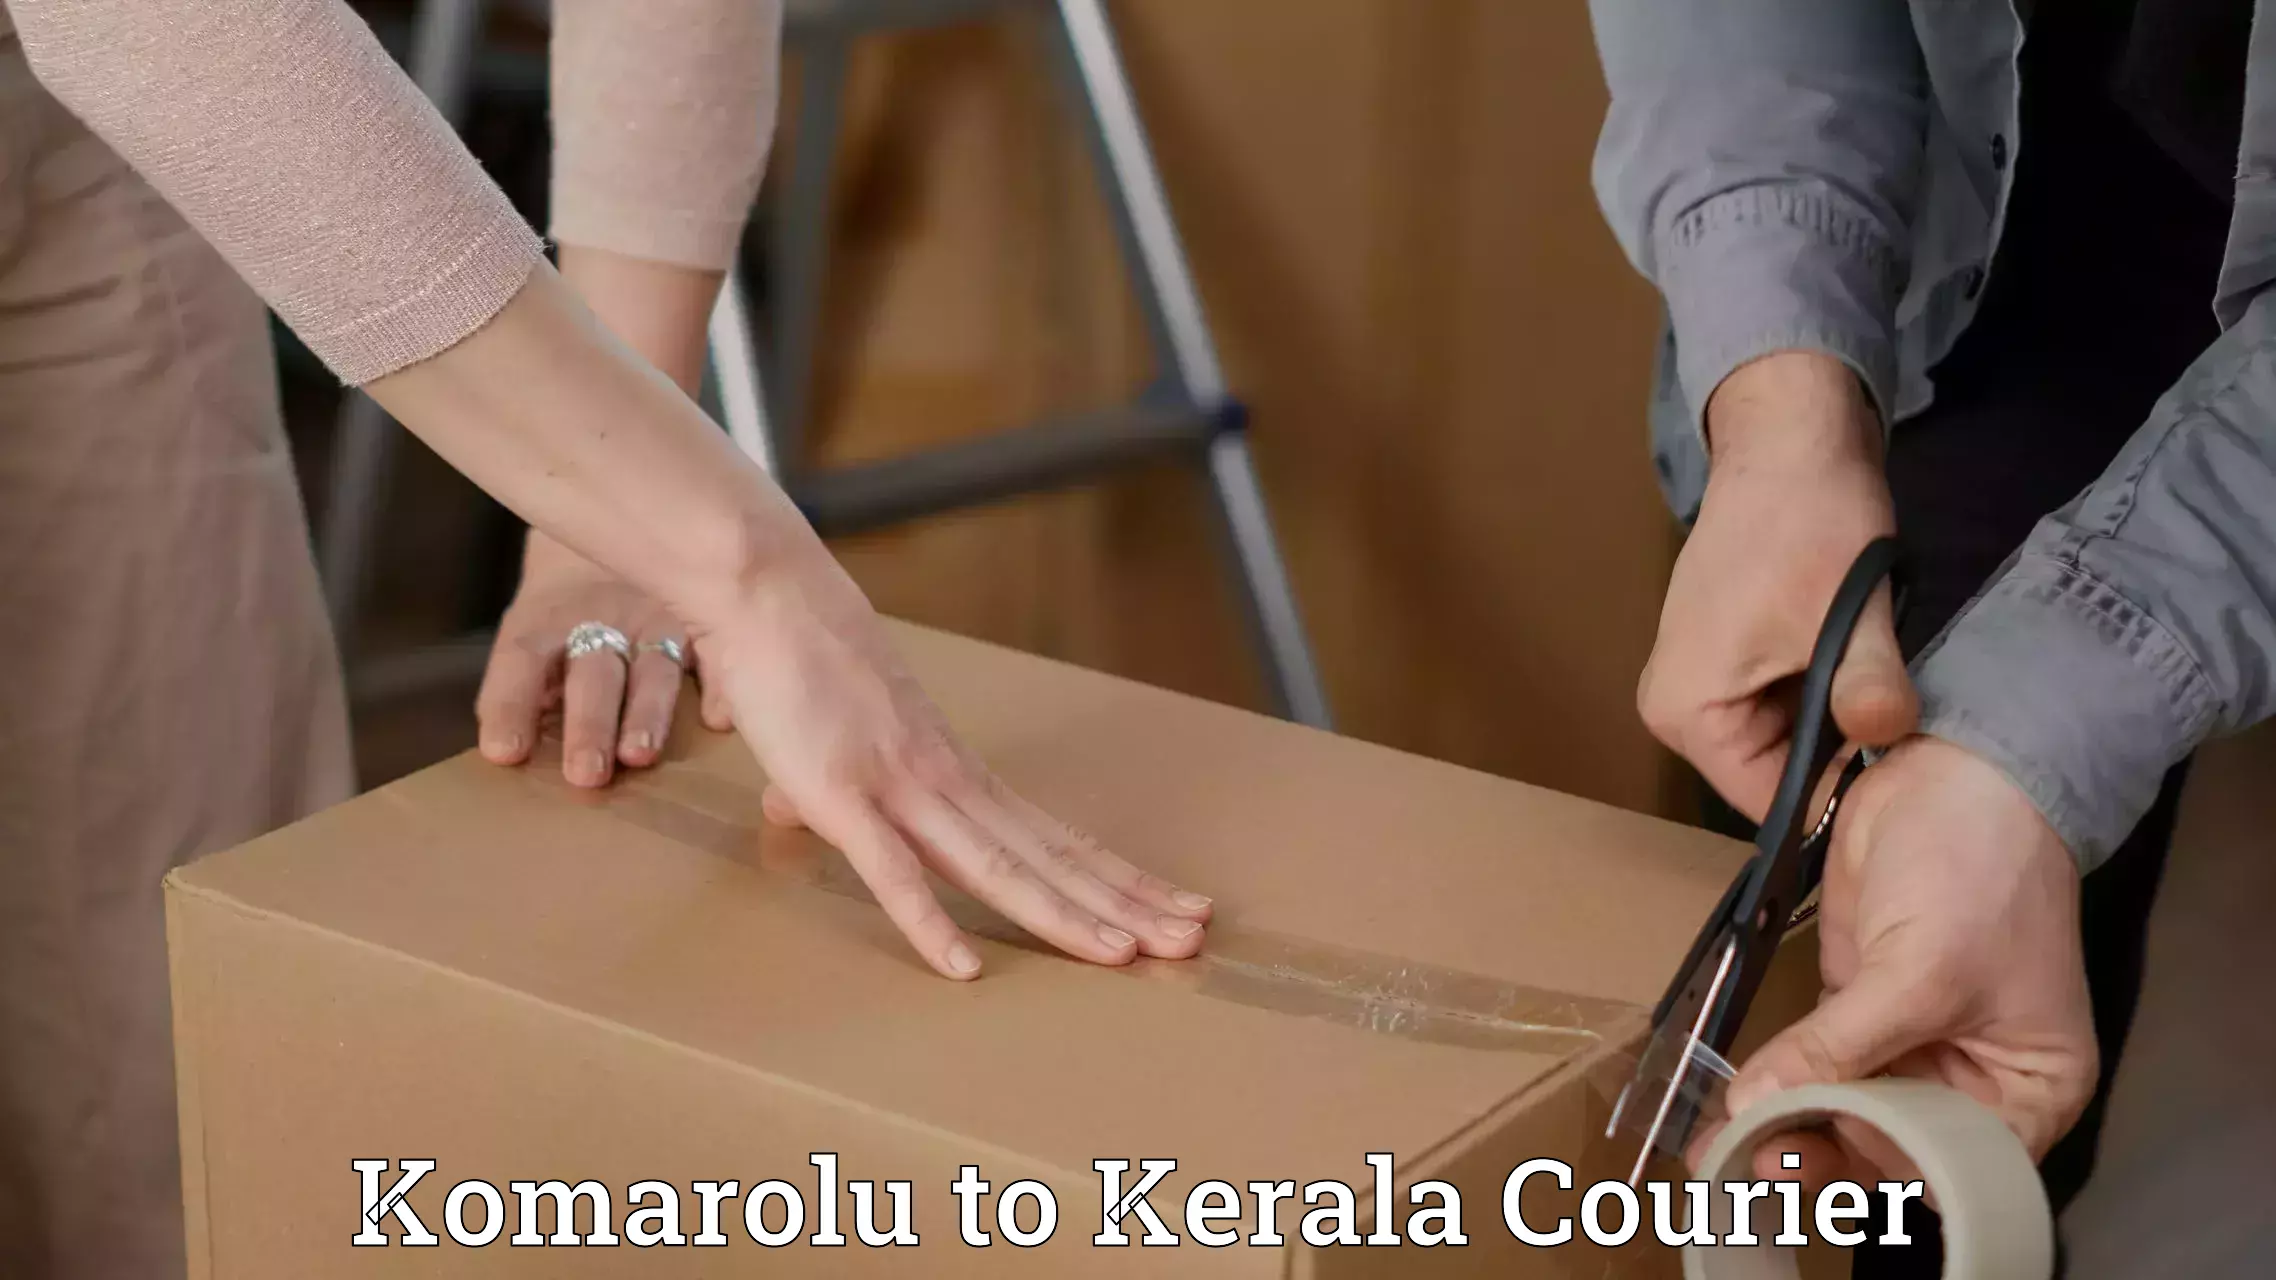 State-of-the-art courier technology Komarolu to Kerala